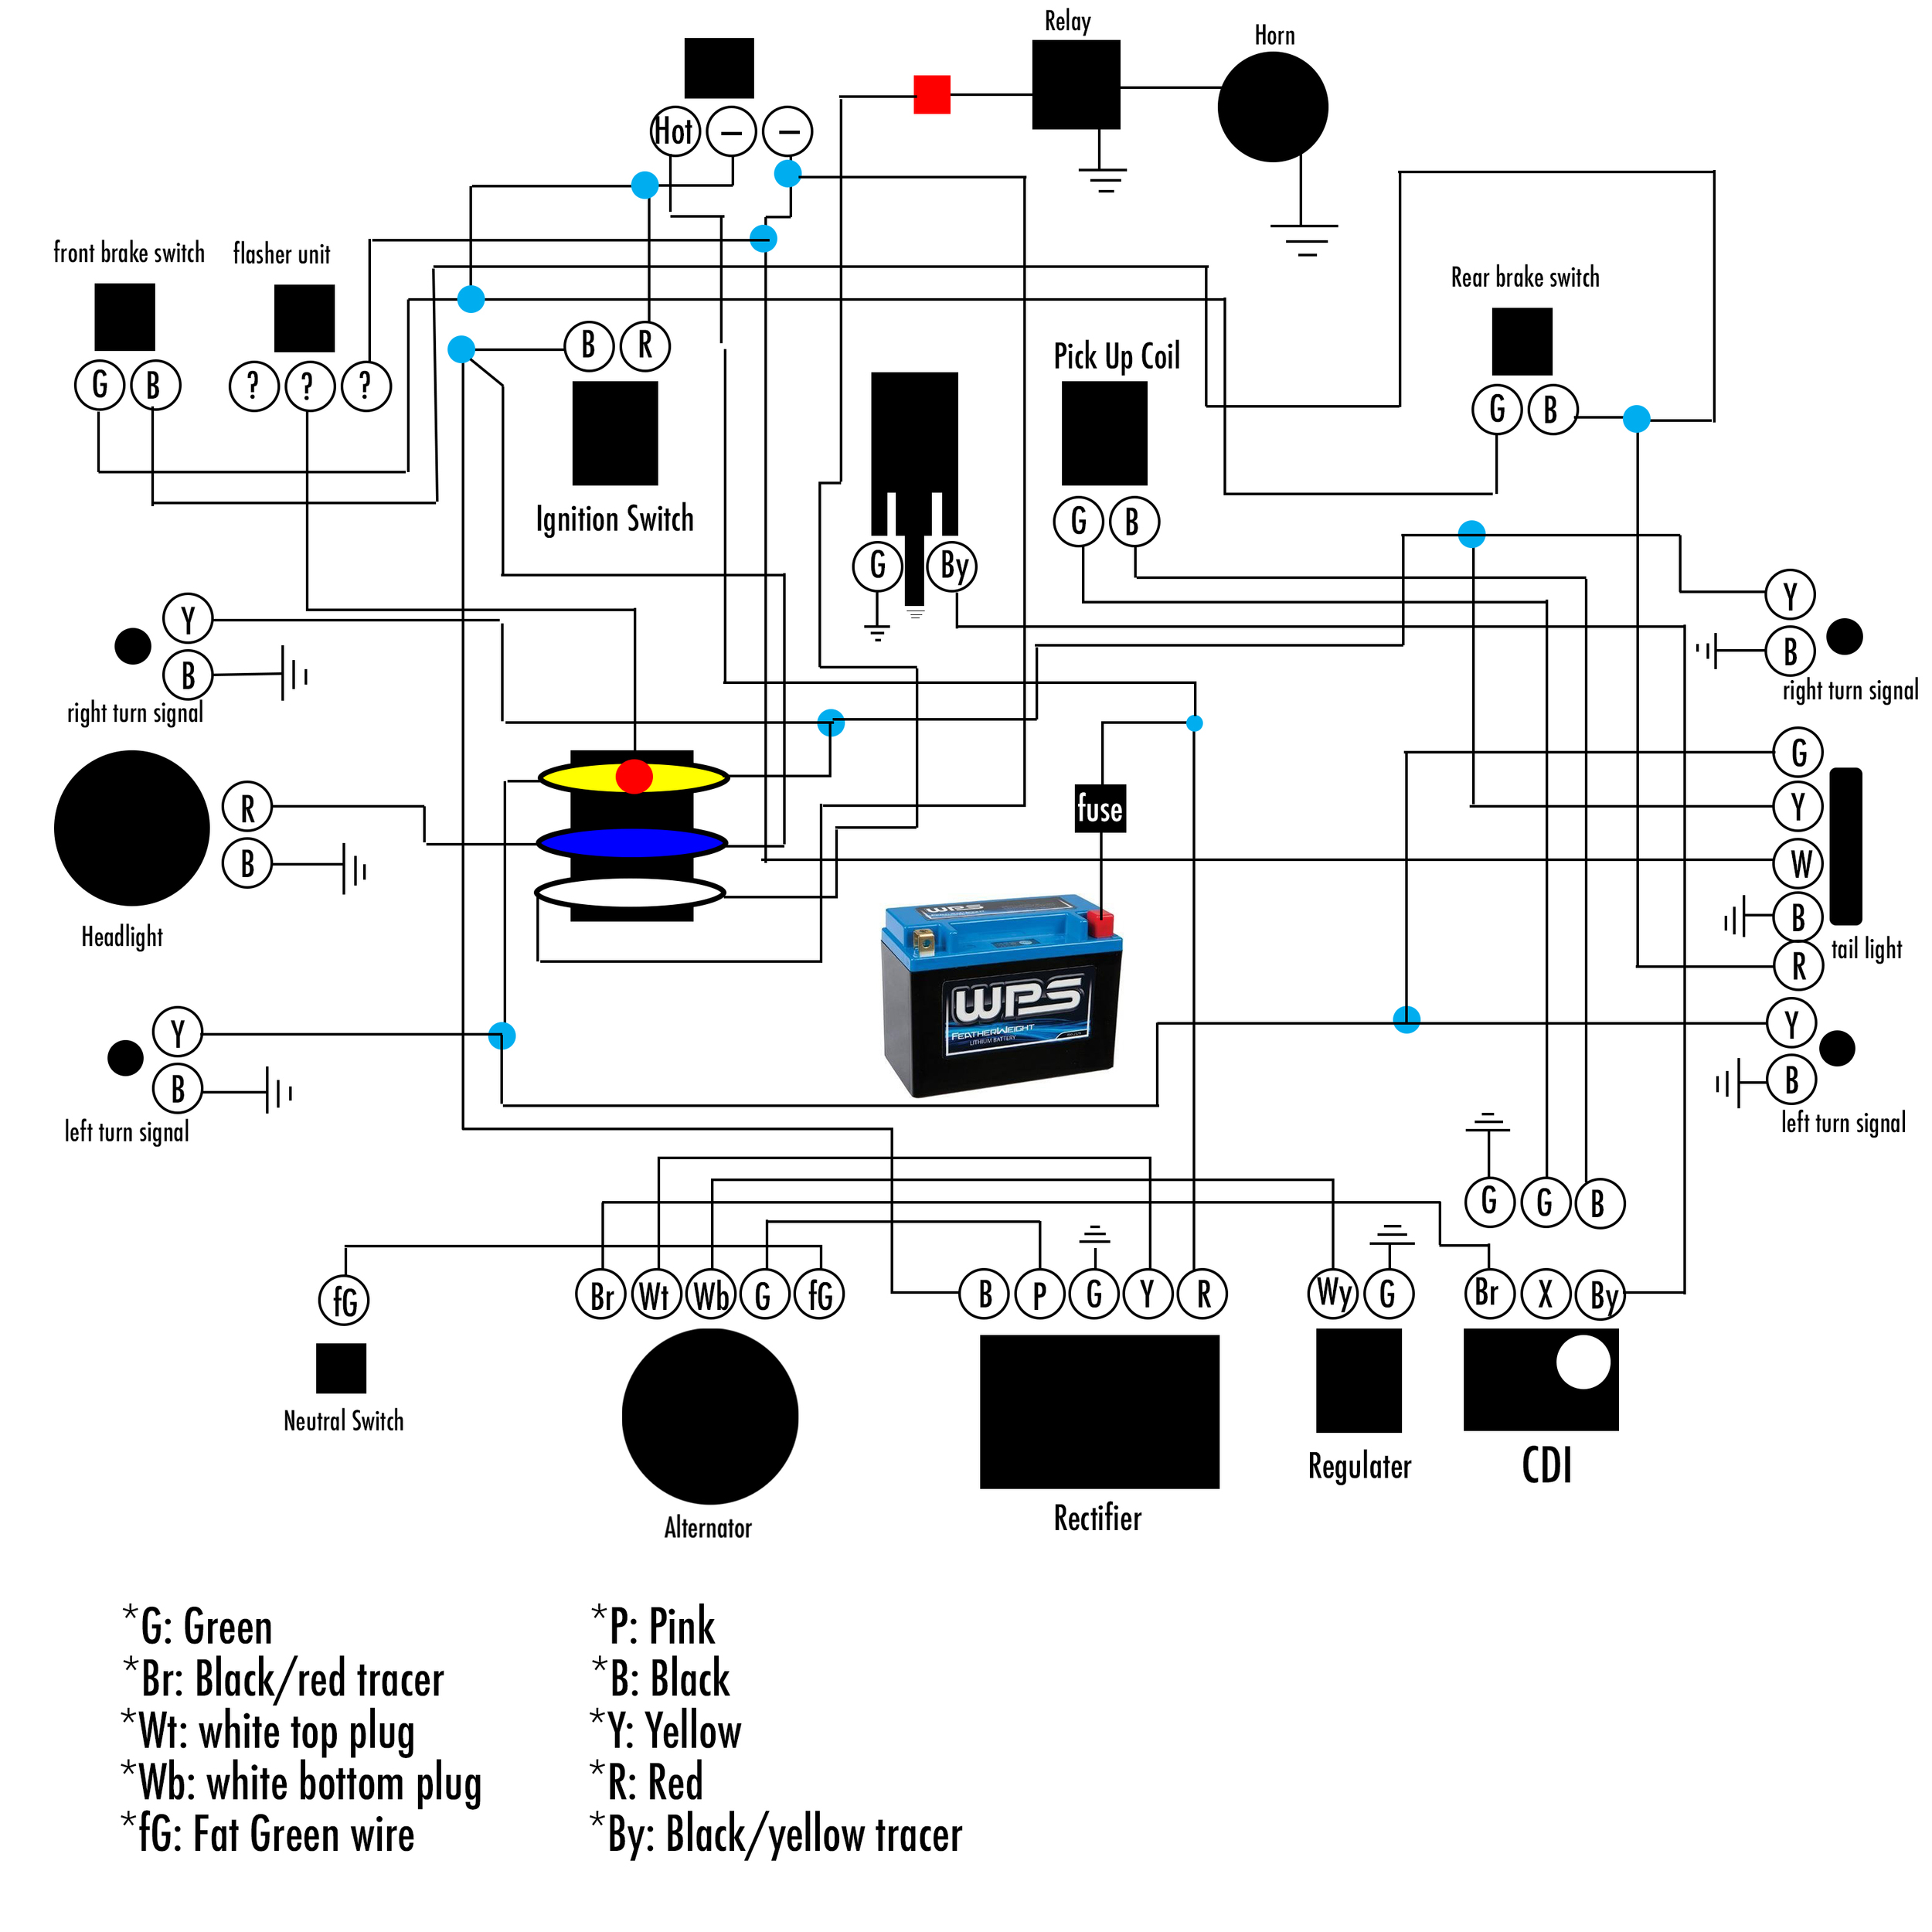 Xl600R Wiring Diagram / Diagram Iron Xl Wiring Diagram 2009 Full